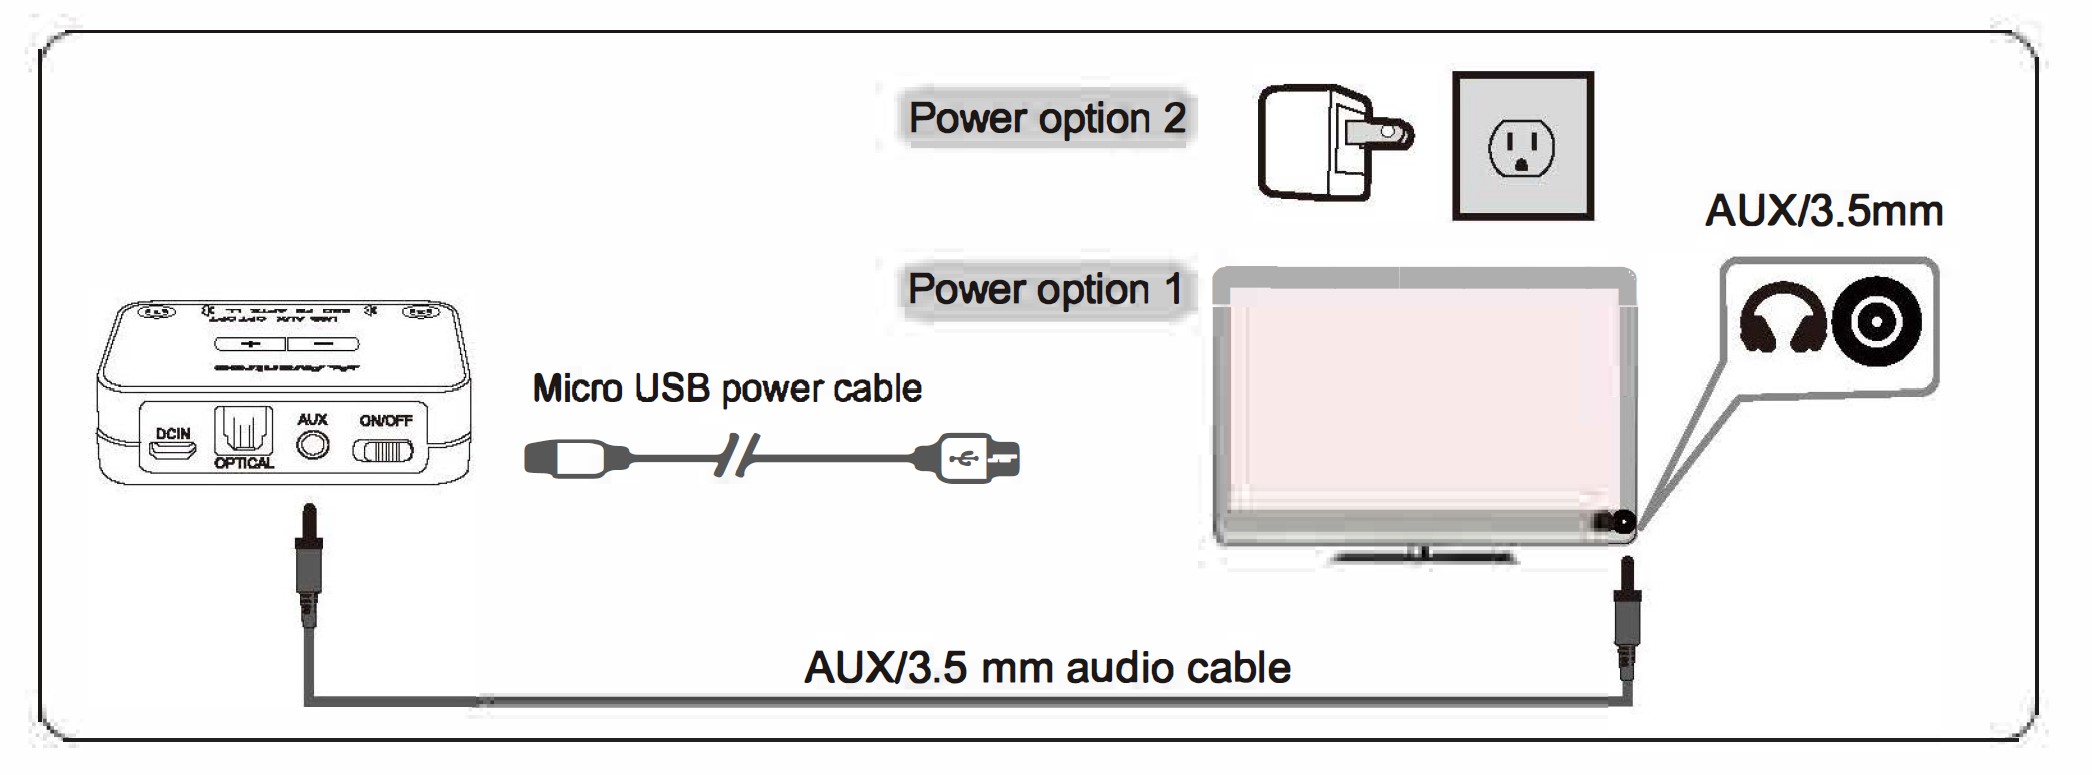 Avantree-Audikast-Plus-Wireless-Audio-Transmitter-Quick-Start-Guide-8